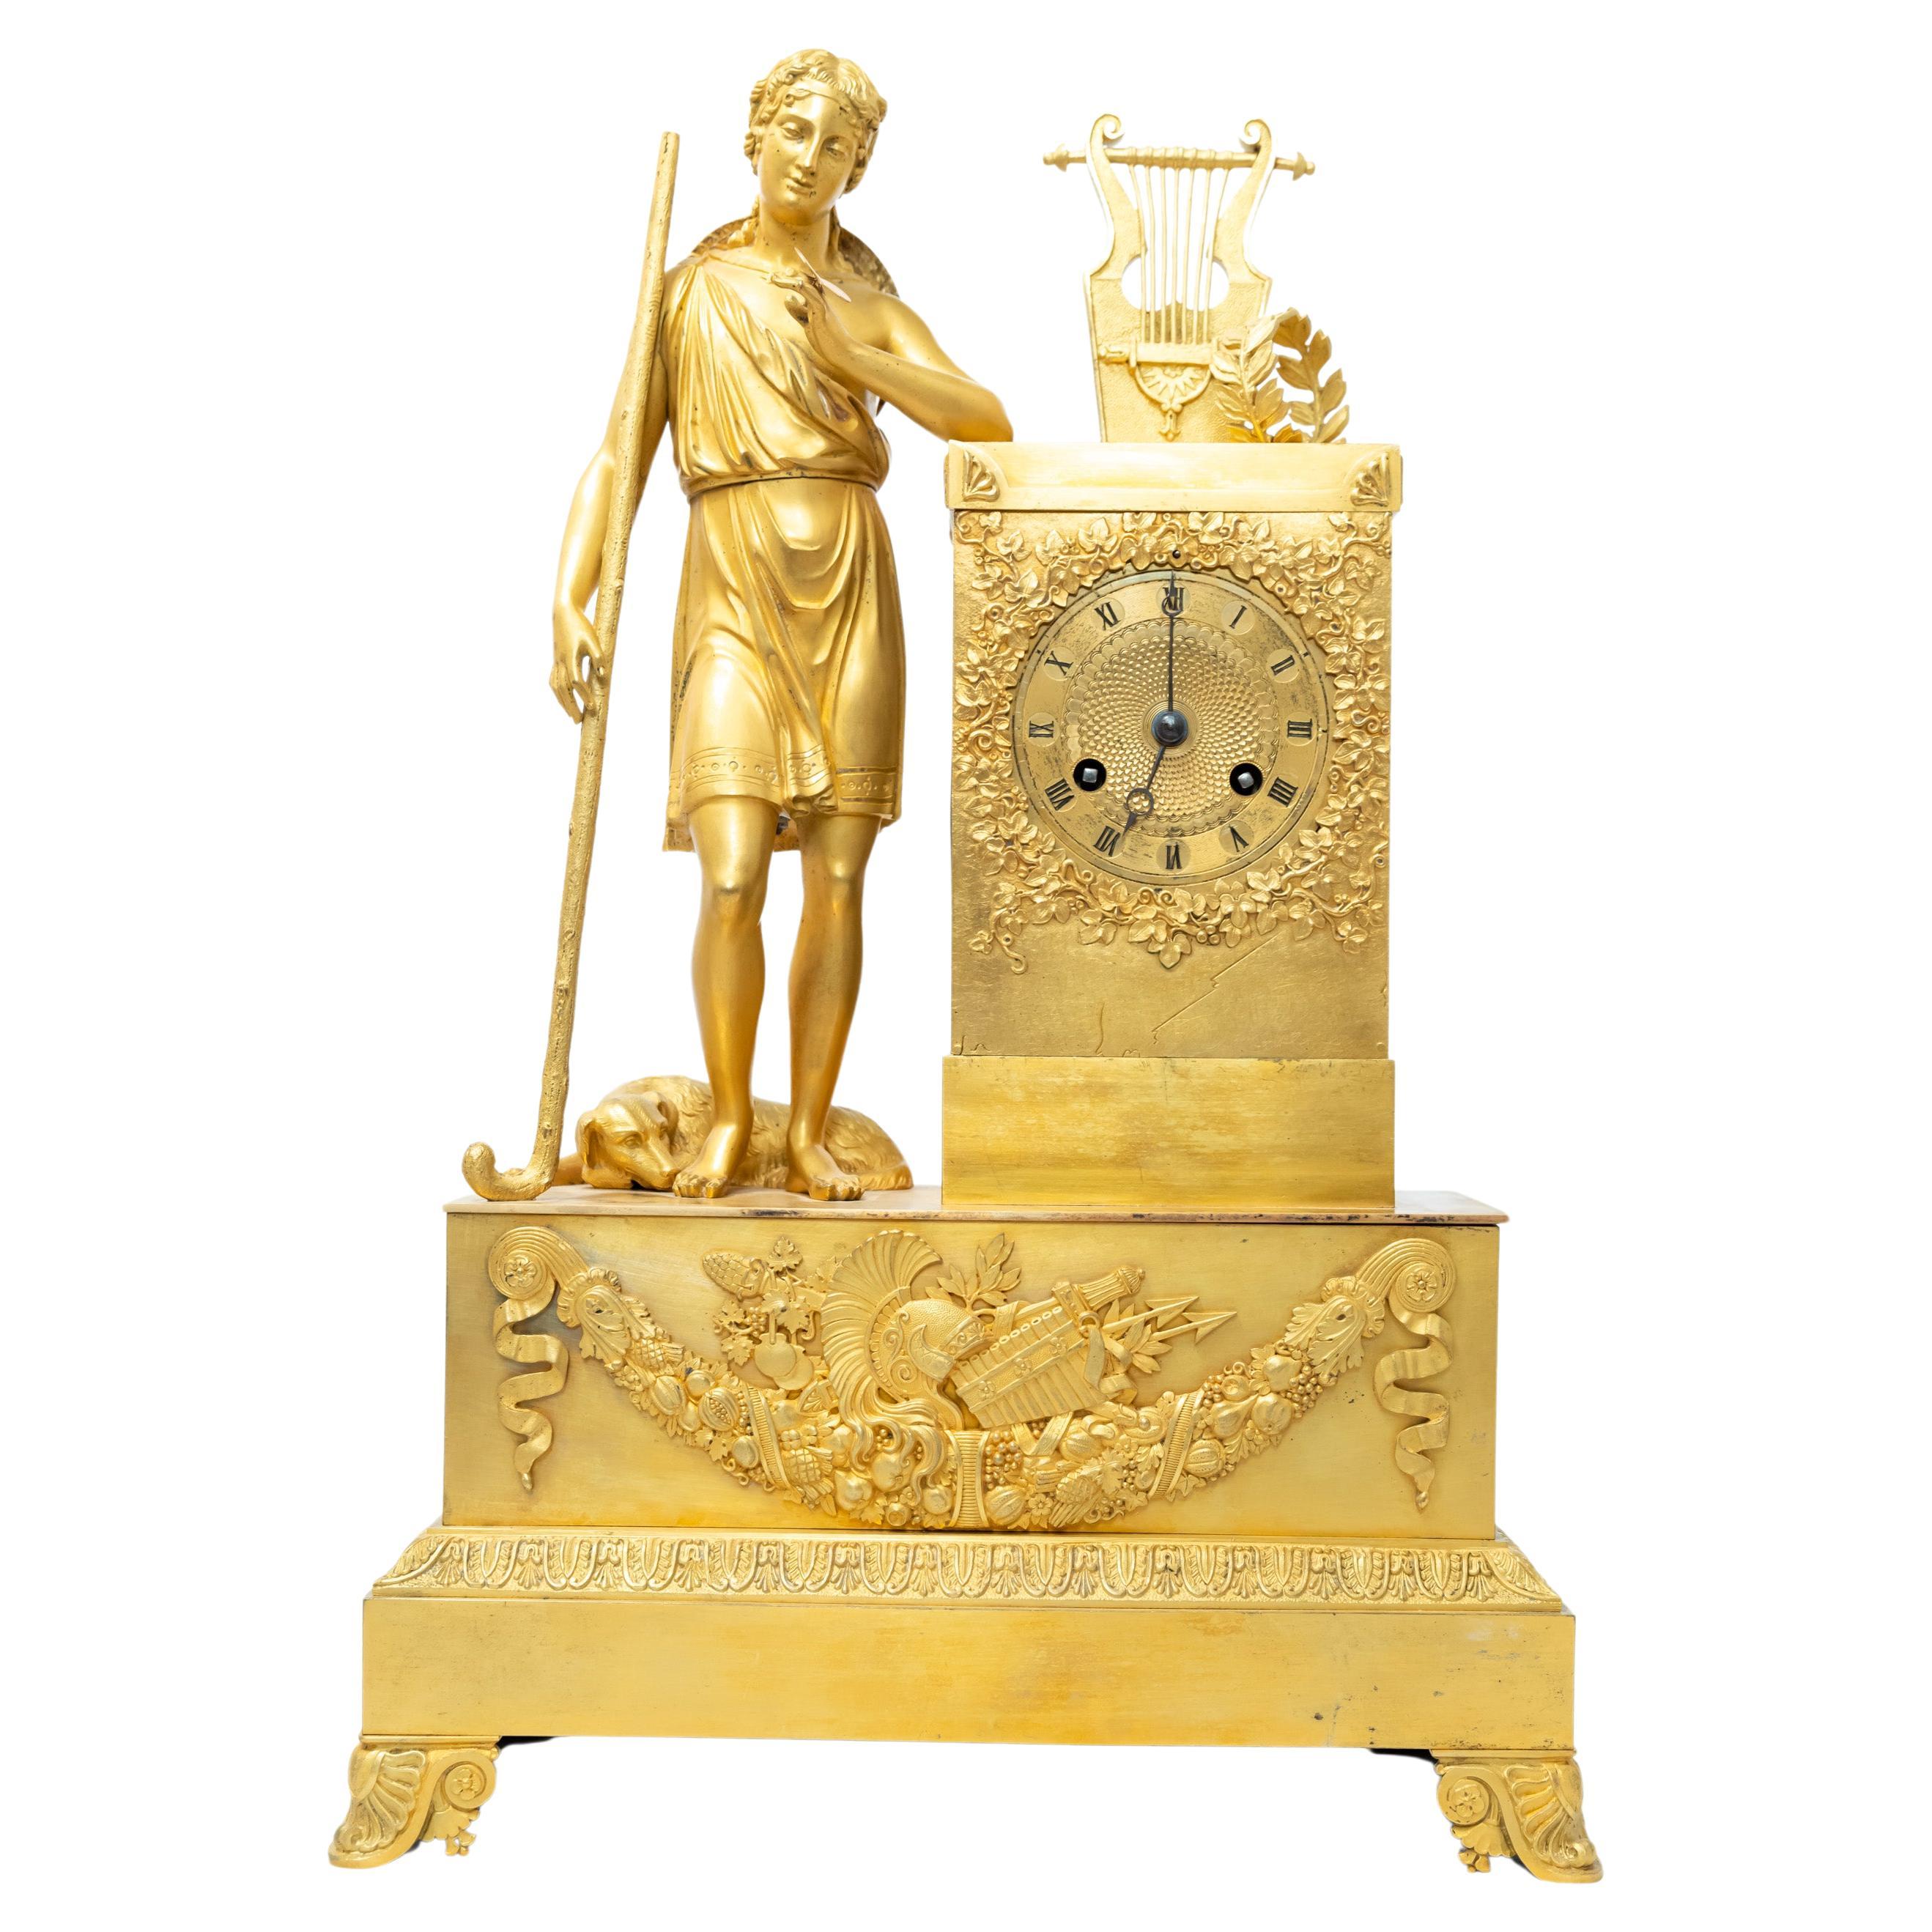 A French Fire-Gilt Bronze Restauration-Era Clock Featuring the “Shepherd Paris” For Sale